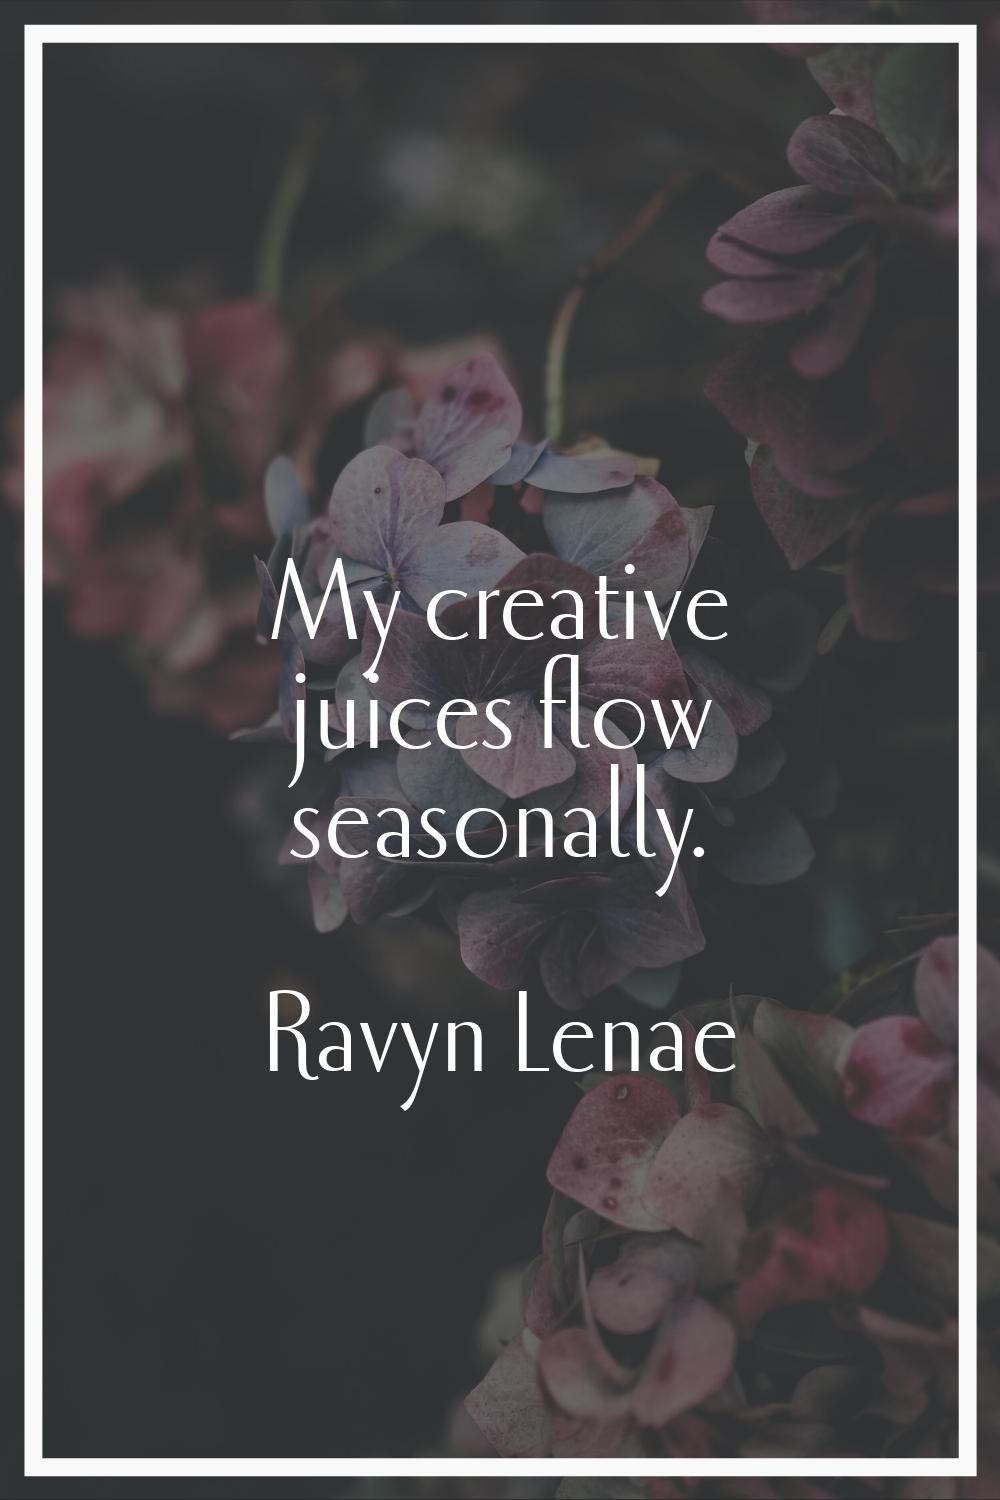 My creative juices flow seasonally.